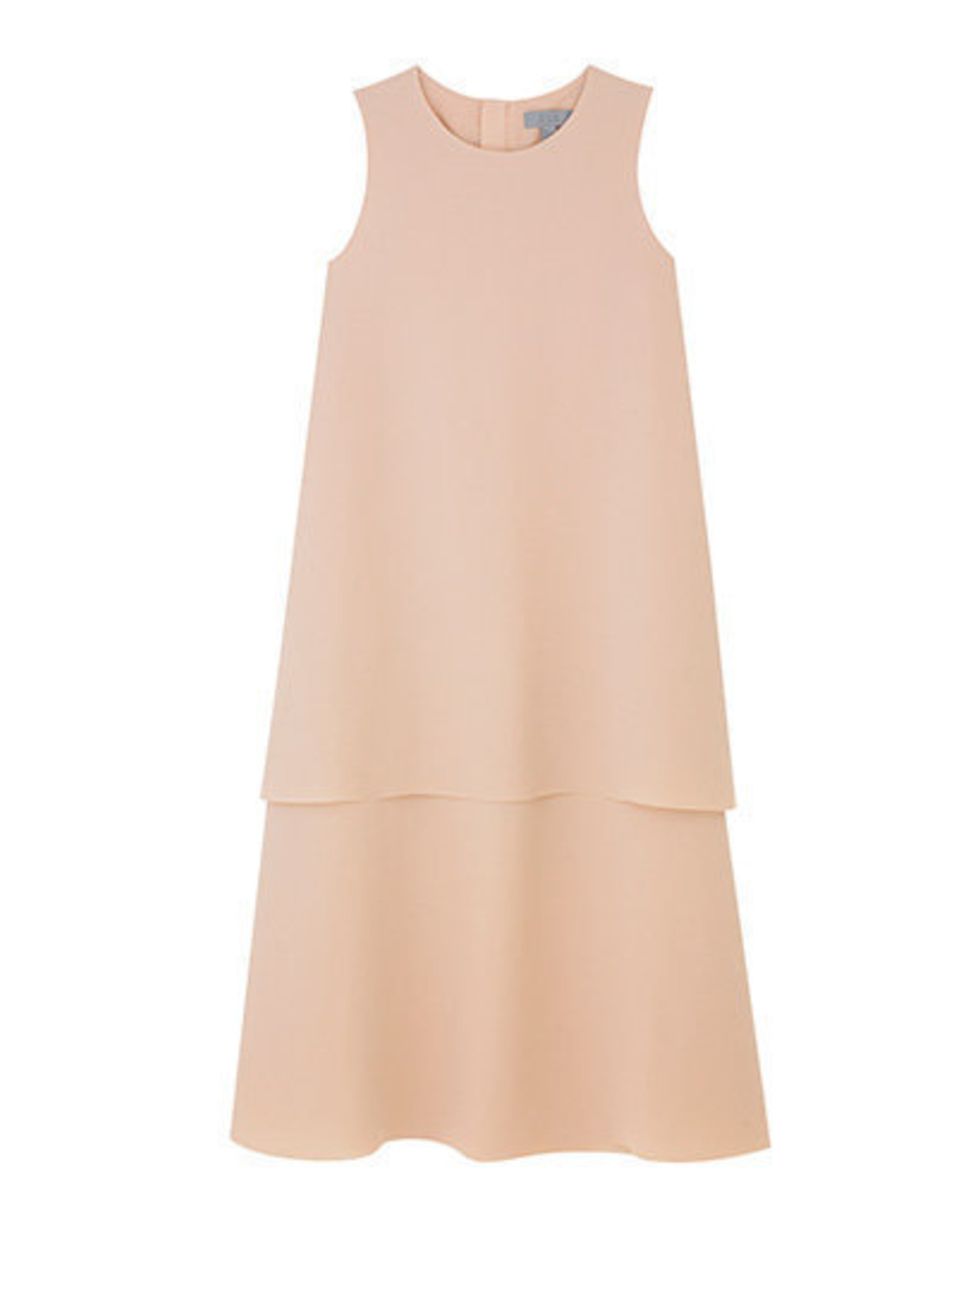 COS simple sleeveless A-line dress, £79